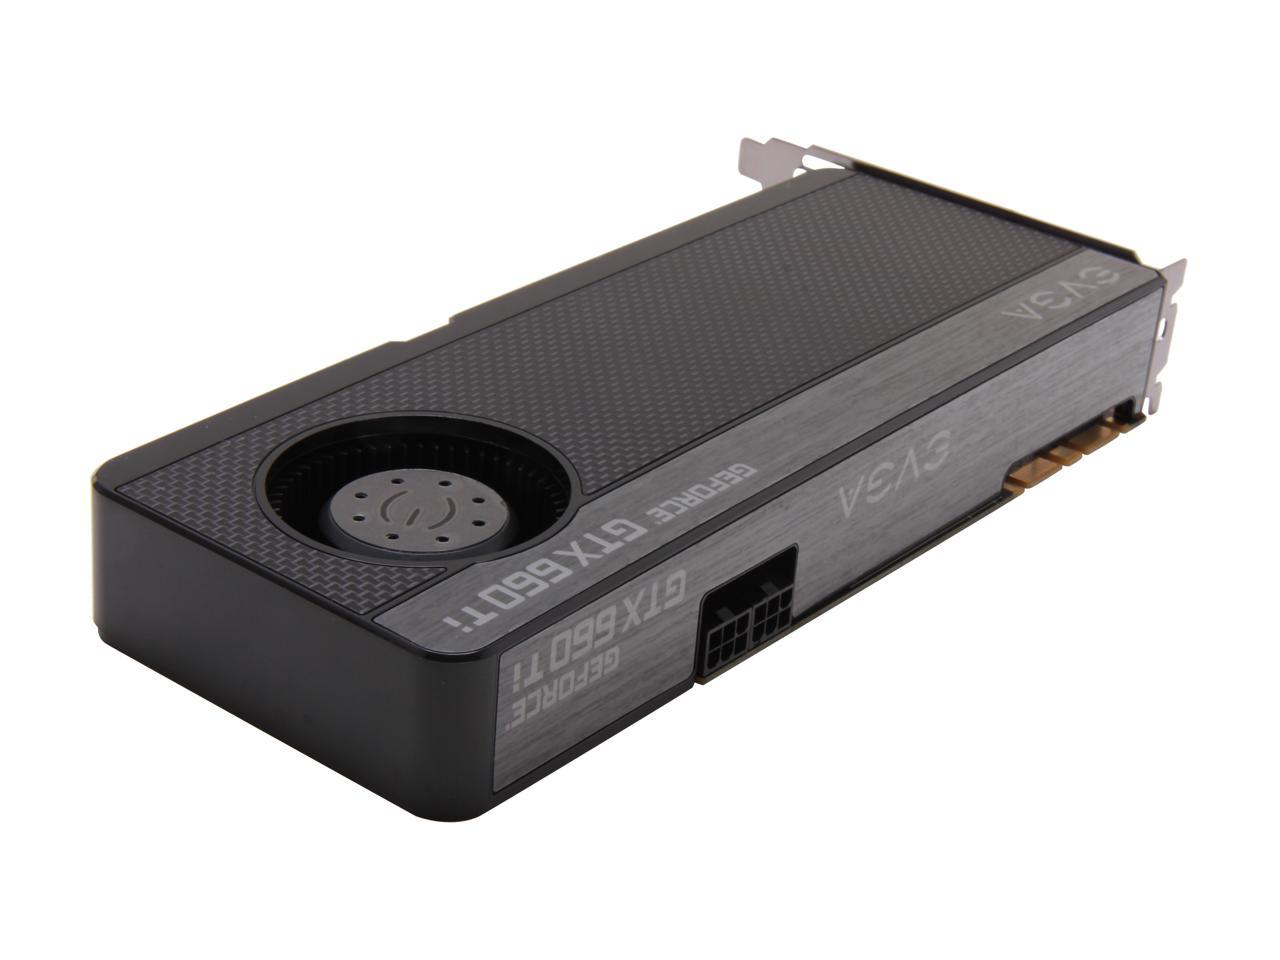 EVGA SuperClocked 02G-P4-3662-KR G-SYNC Support GeForce GTX 660 Ti 2GB 192-bit GDDR5 PCI Express 3.0 x16 HDCP Ready SLI Support Video Card